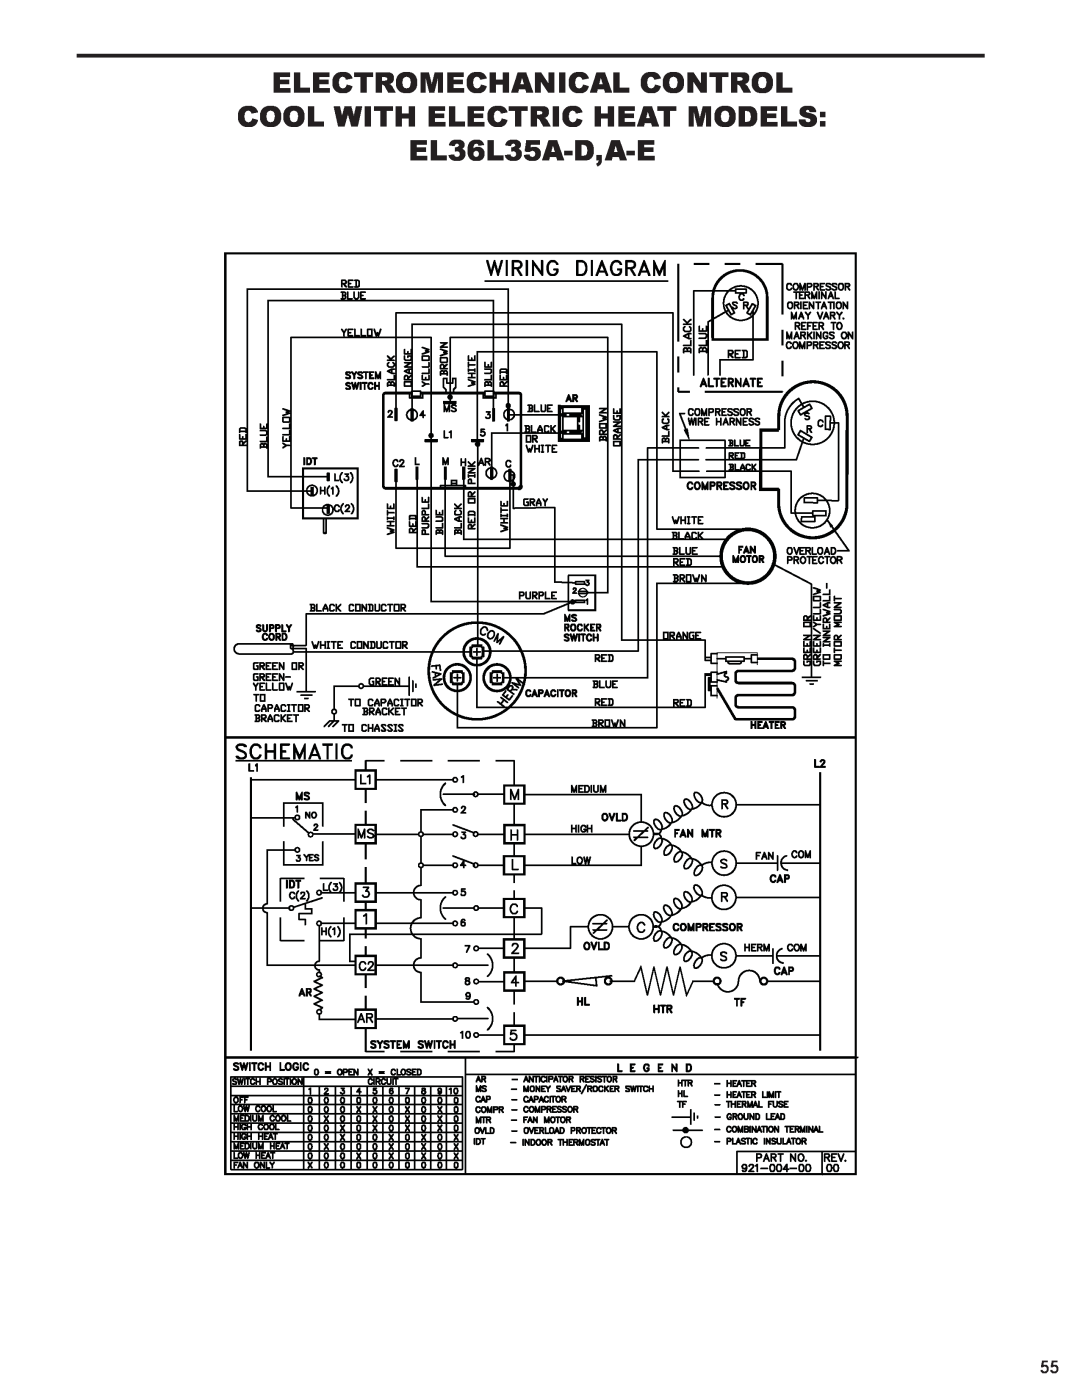 Friedrich 2009, 2008 service manual COOL WITH ELECTRIC HEAT MODELS EL36L35A-D,A-E, Electromechanical Control 